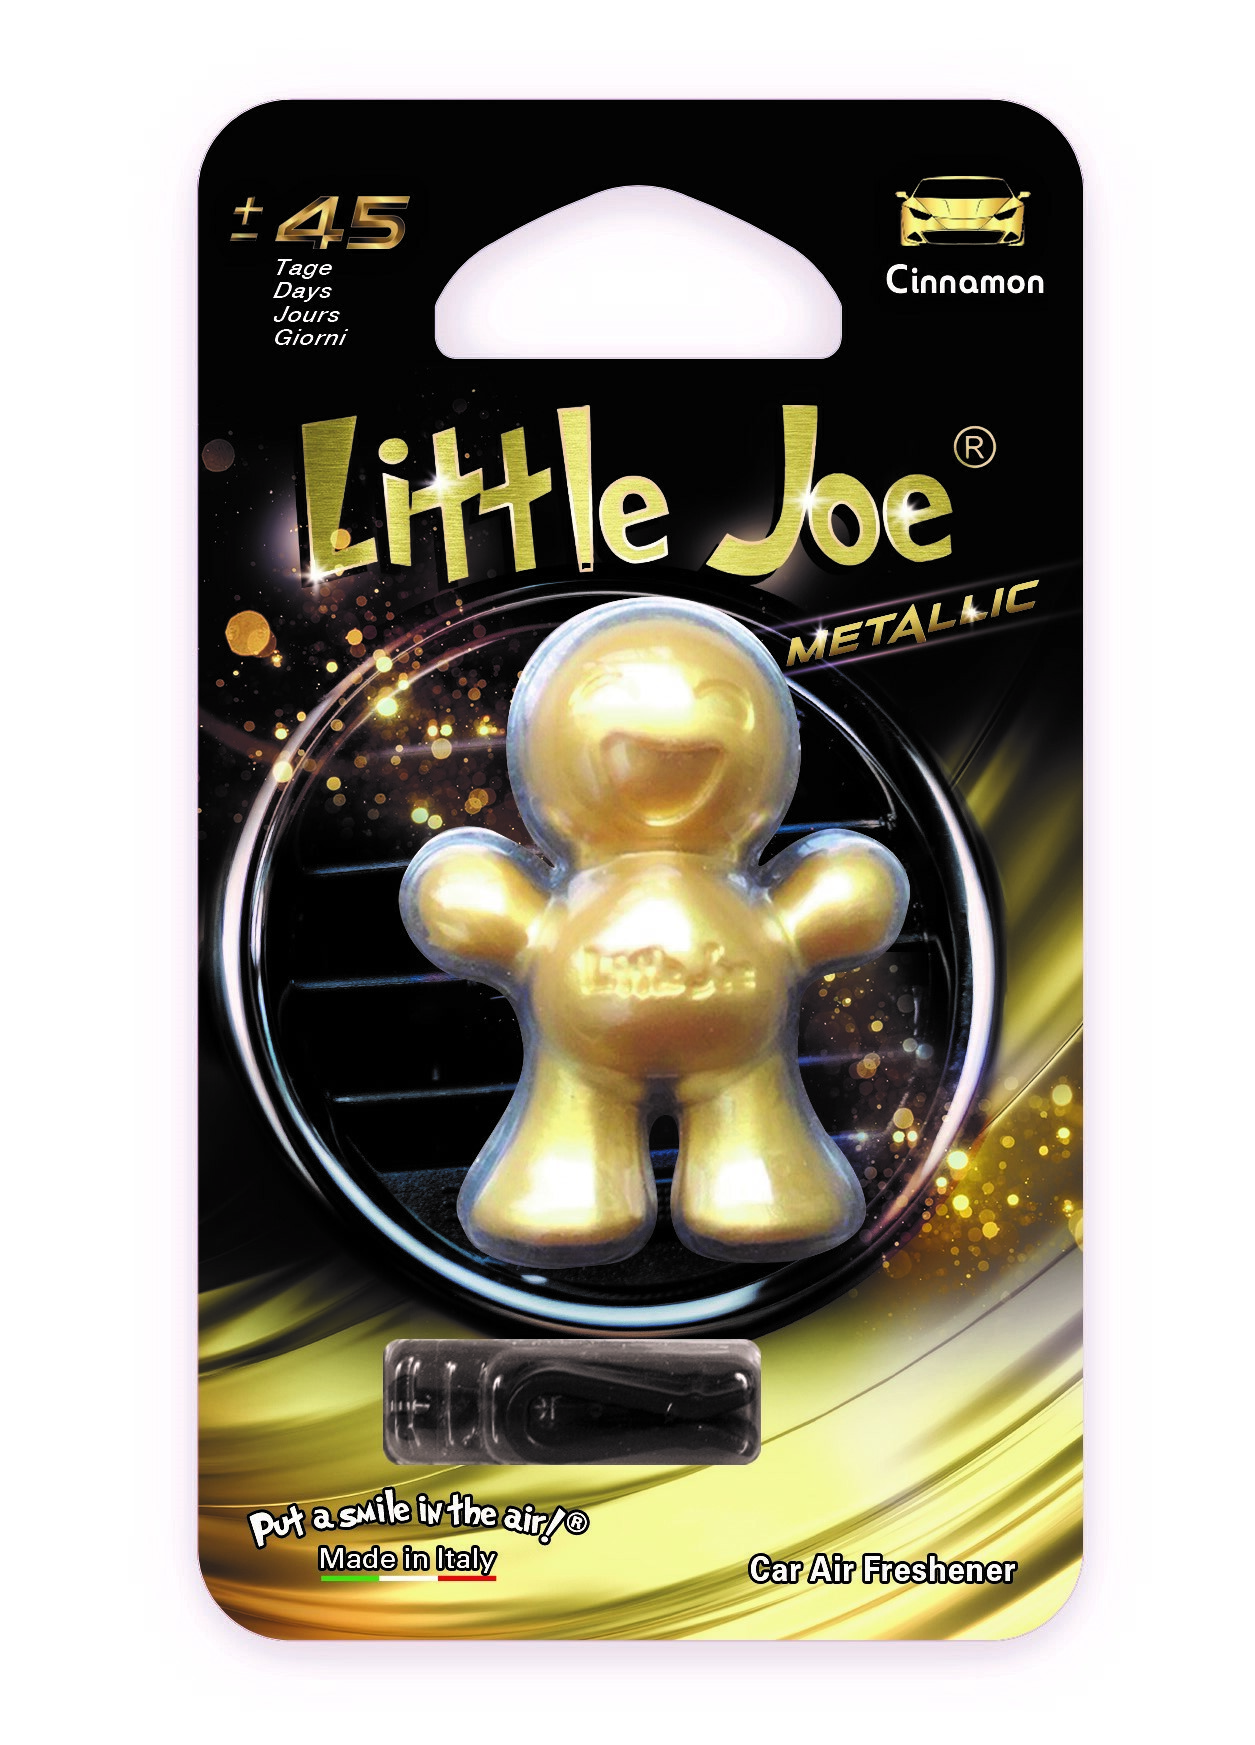 Little Joe Metallic (корица)